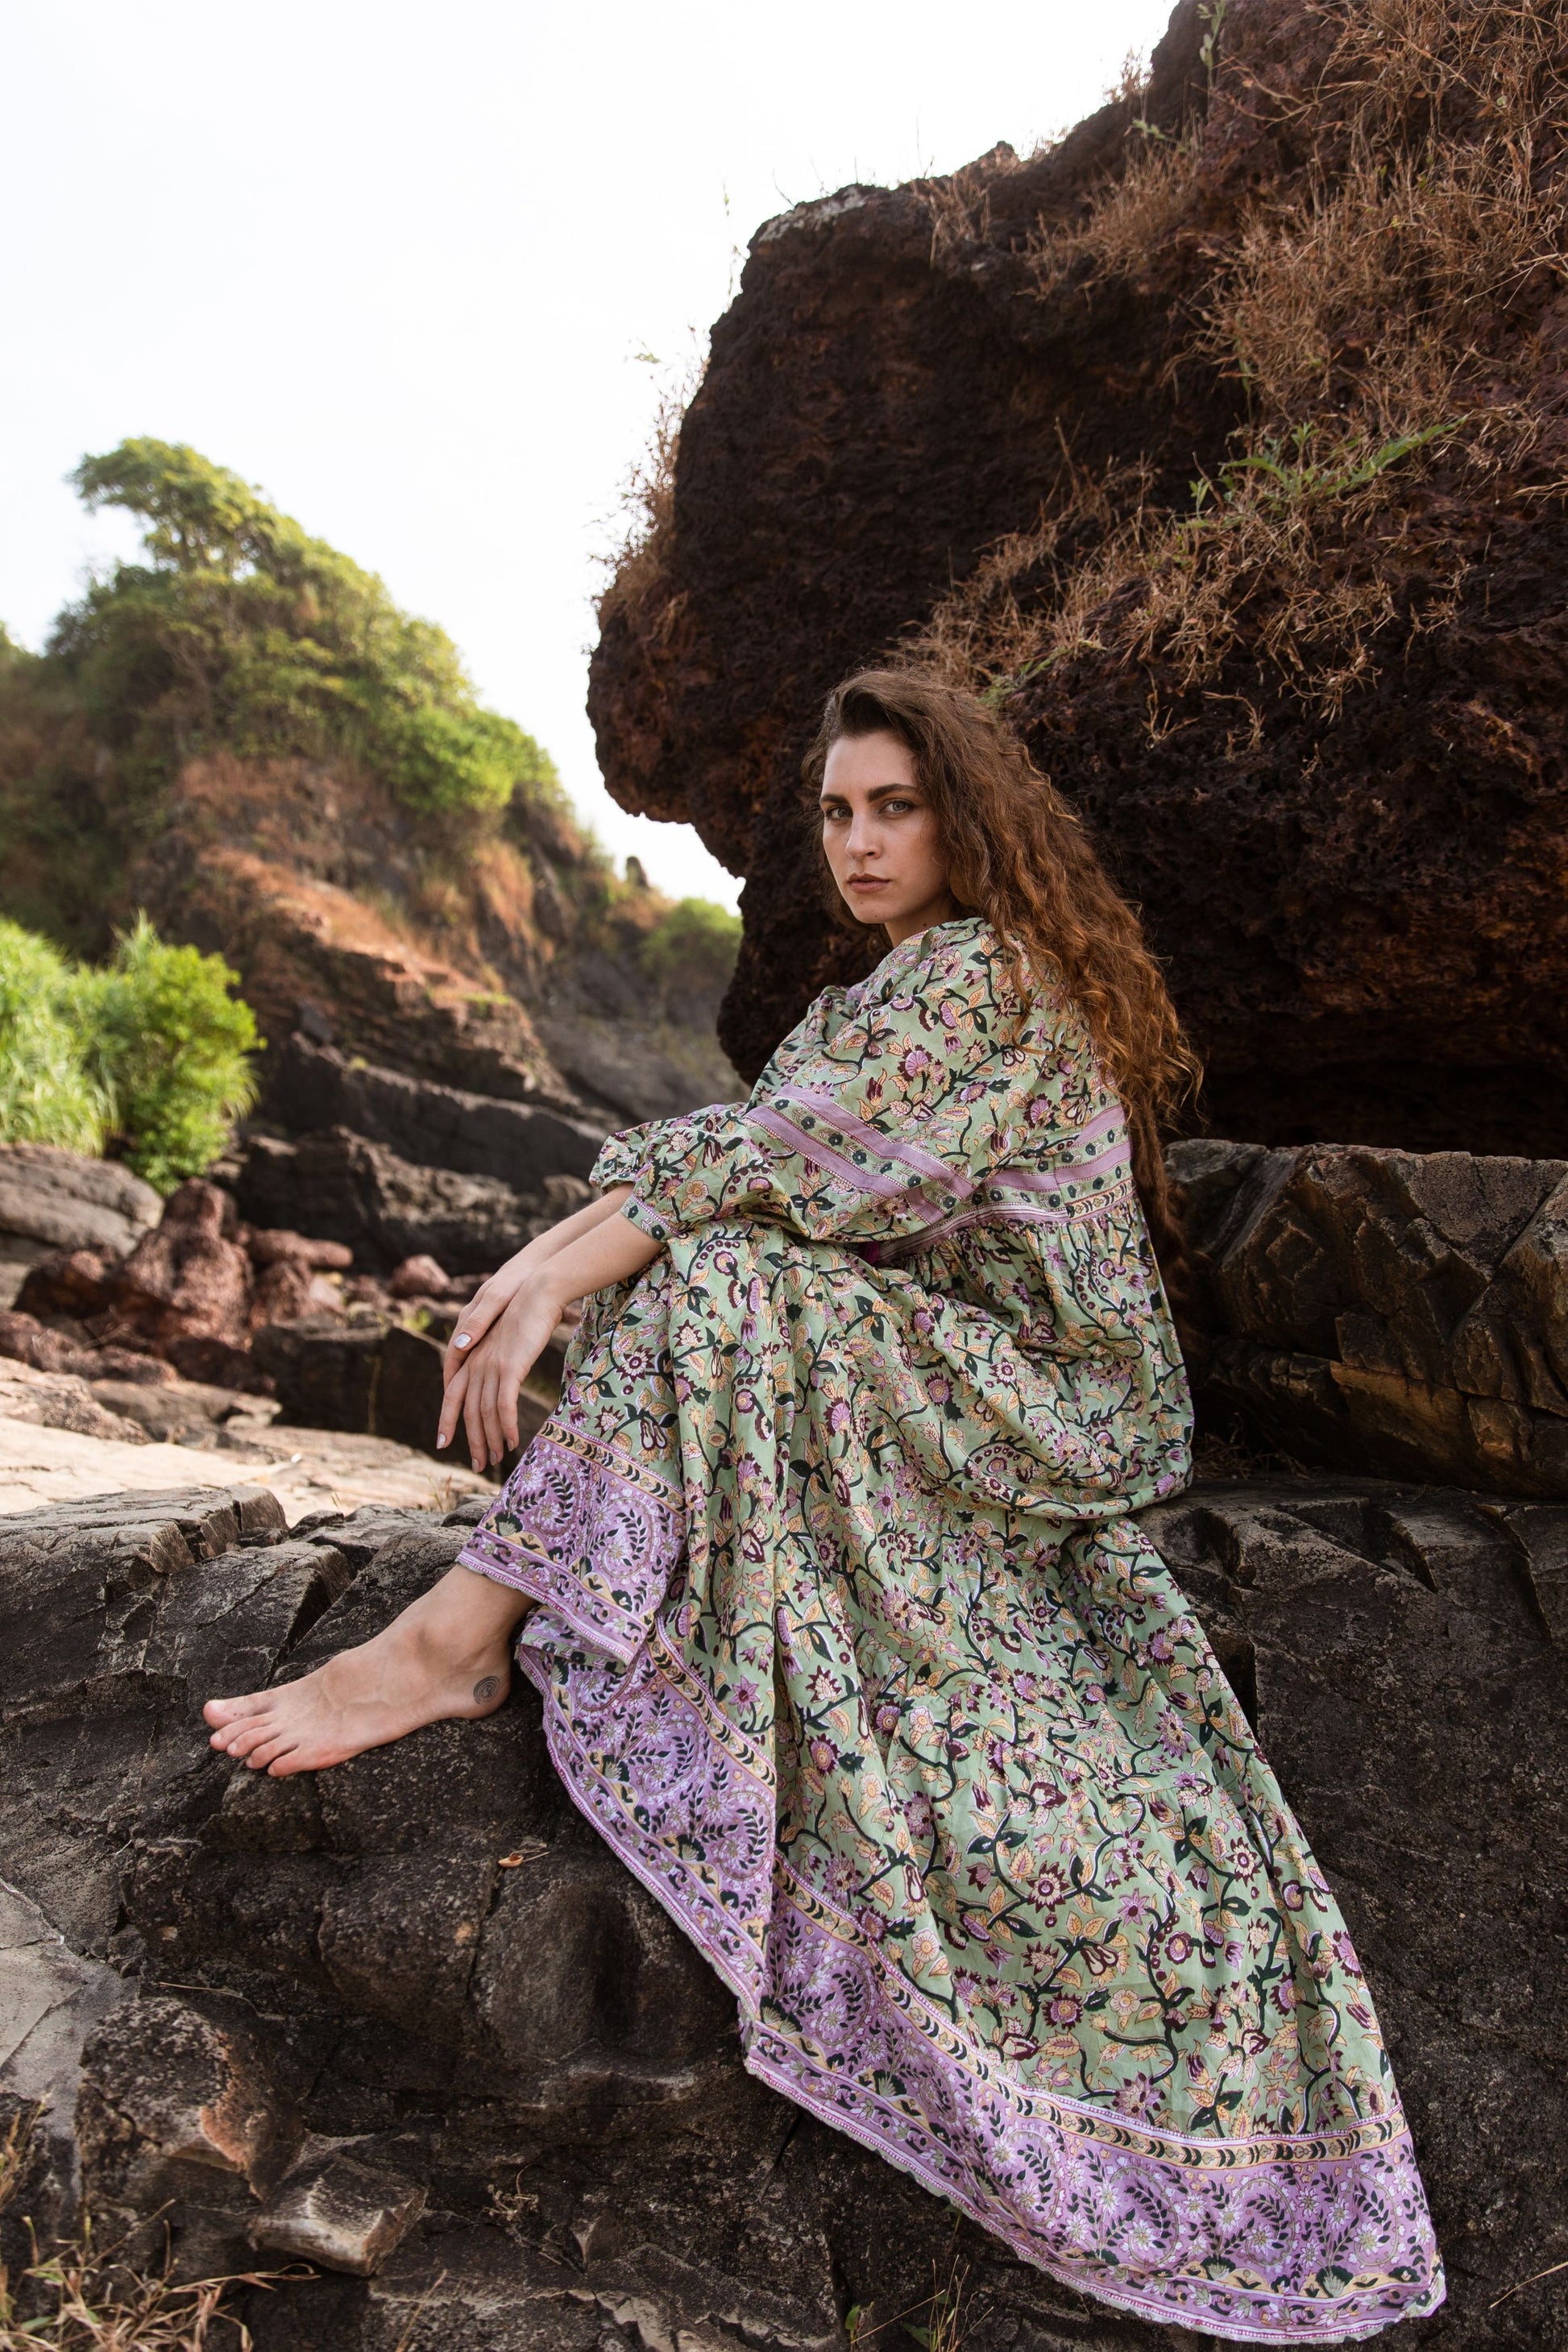 Model seated on beach rocks wearing the Ubek Bohemian Dress.